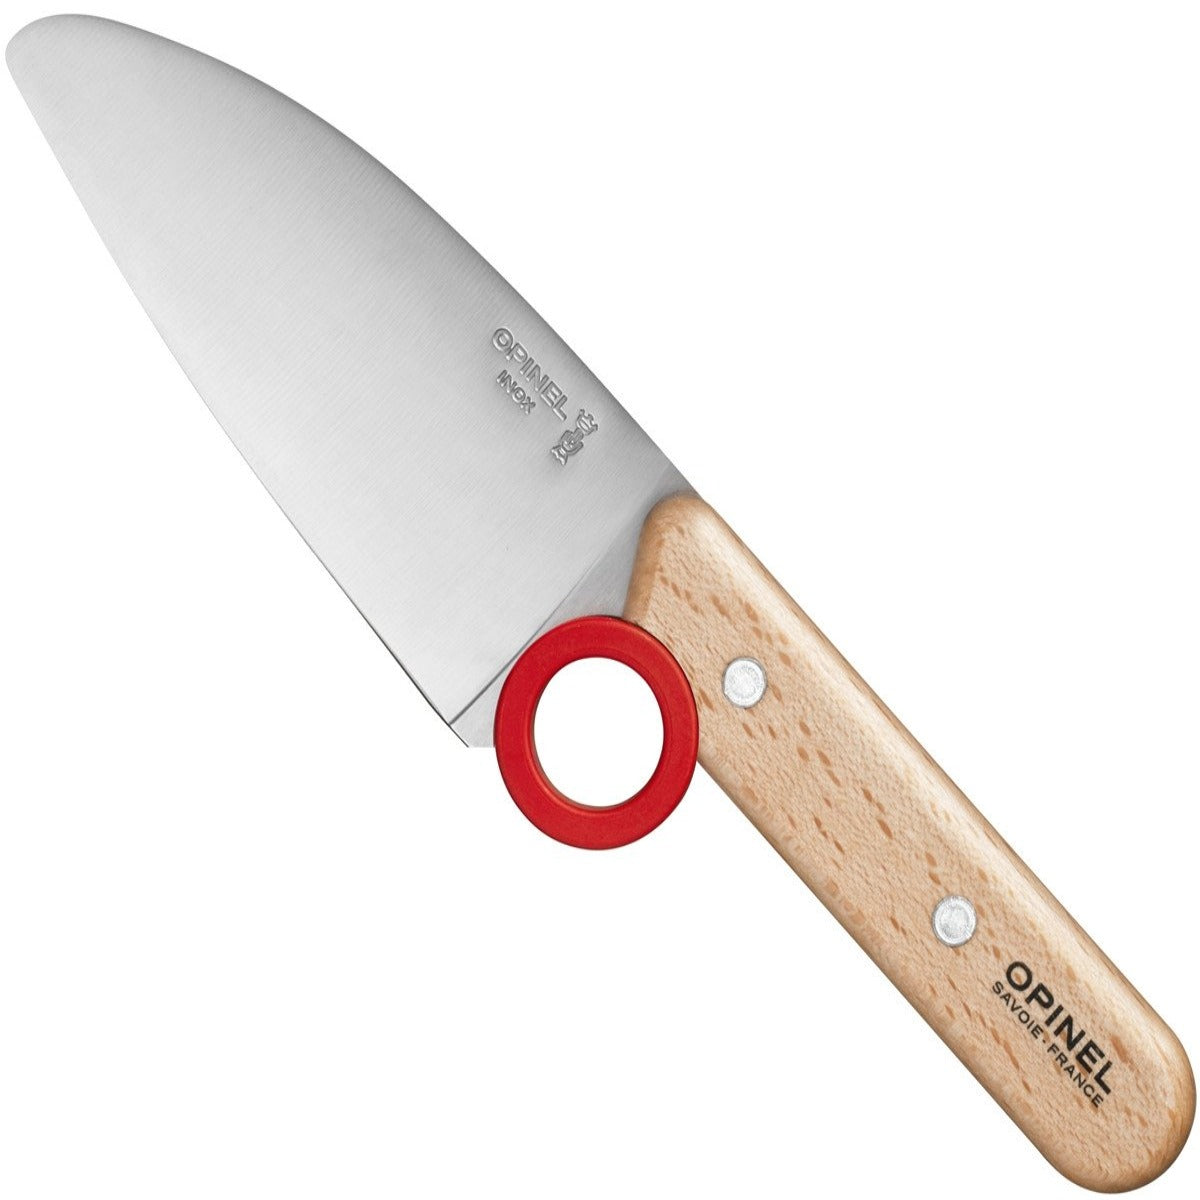 Opinel Les Essentials+ Small Kitchen Prep 3 Piece Knife Set - Paring K —  CHIMIYA